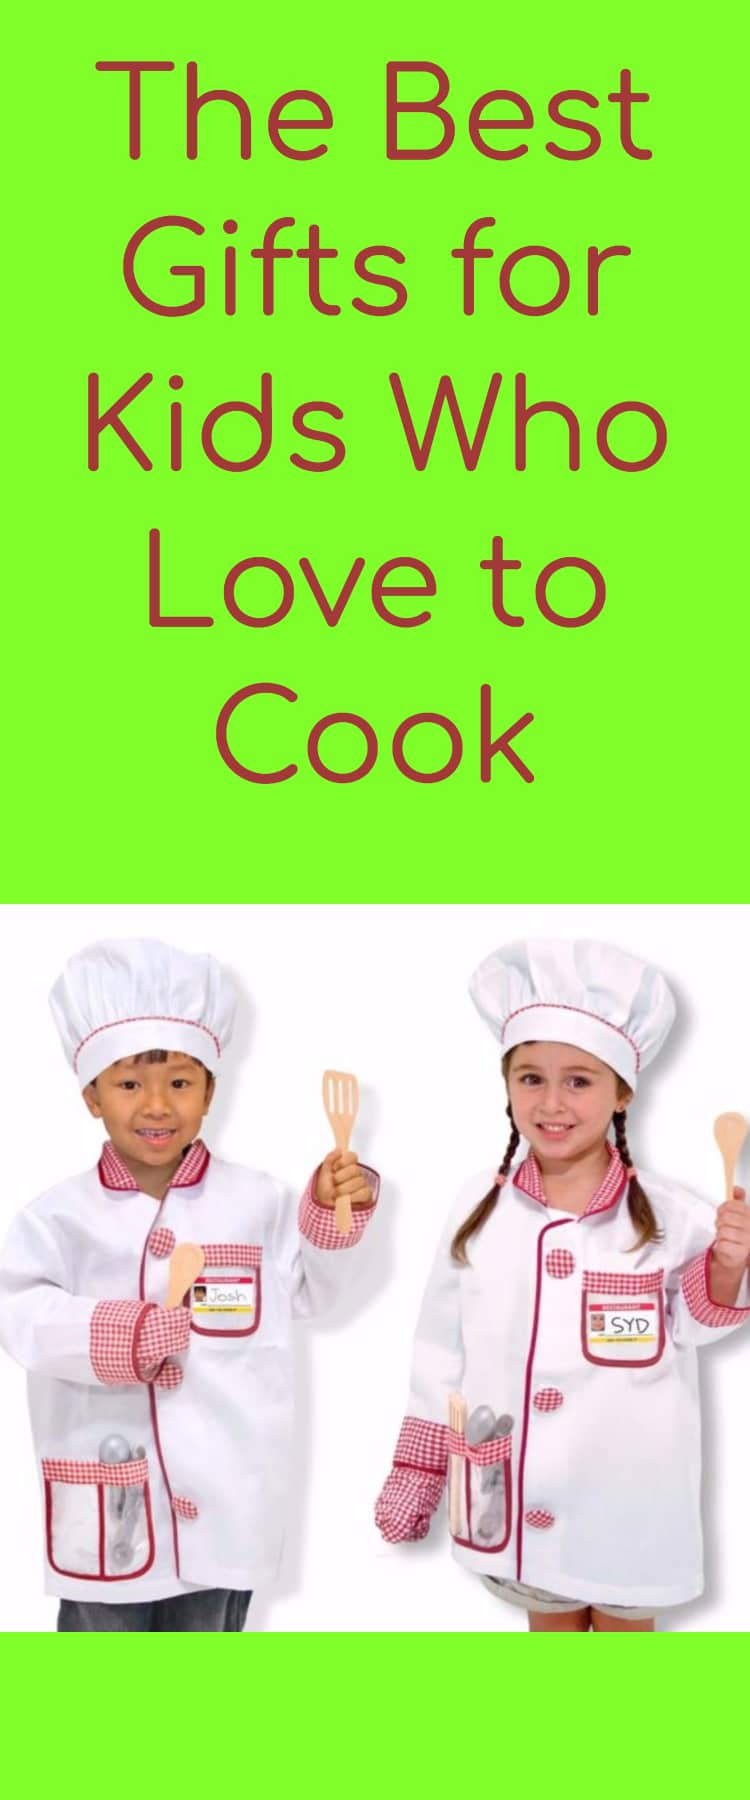 https://www.clarkscondensed.com/wp-content/uploads/2017/10/kids-cooking-gifts.jpg